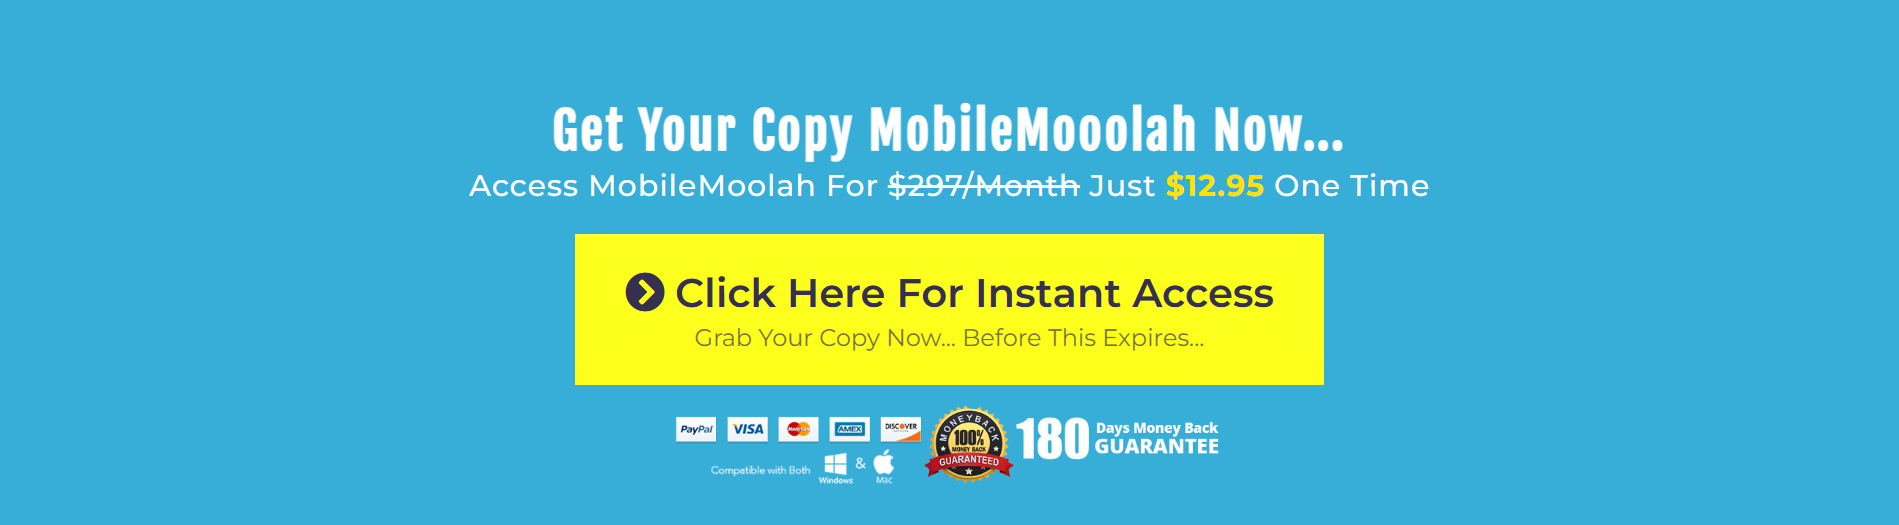 Mobile Moolah Review CTA Section